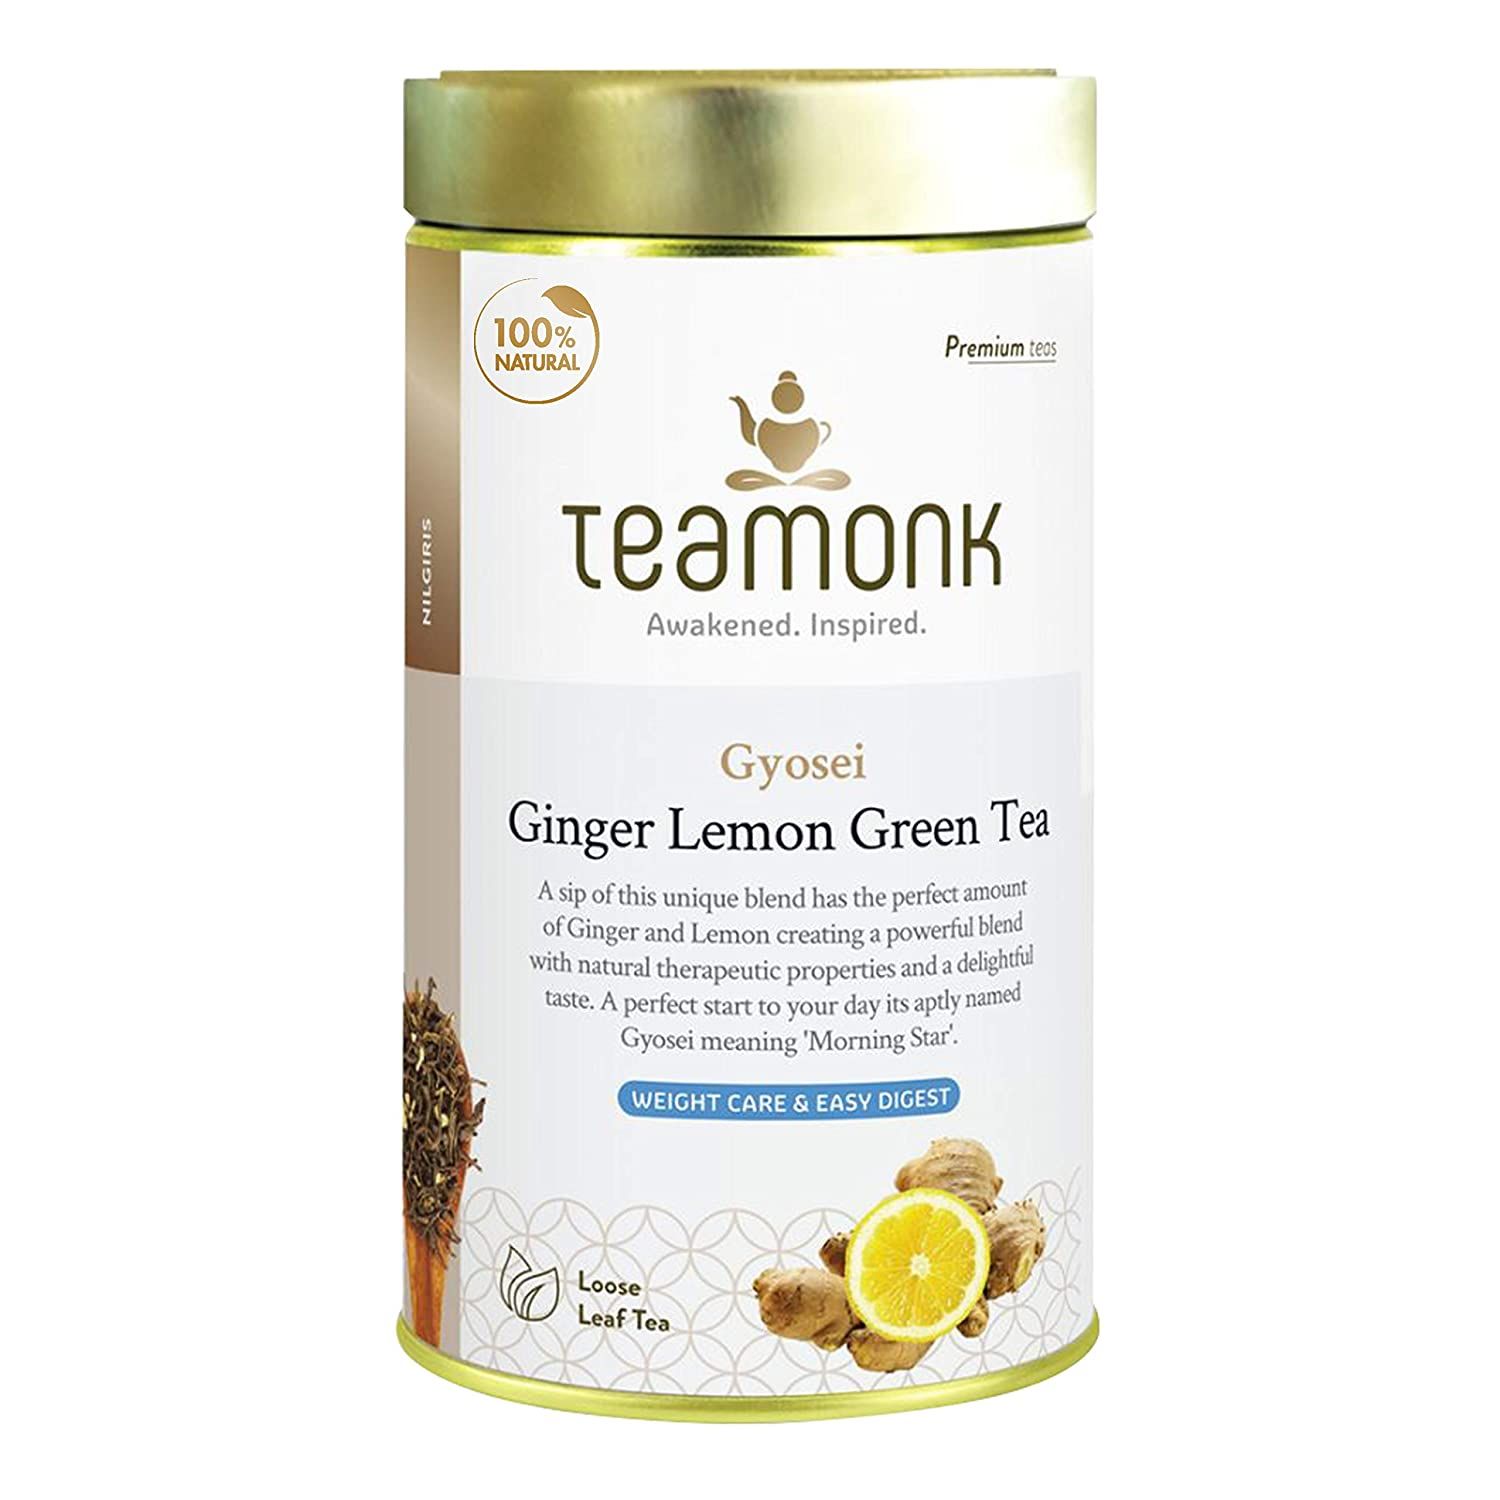 Teamonk Ginger Lemon Green Tea Image